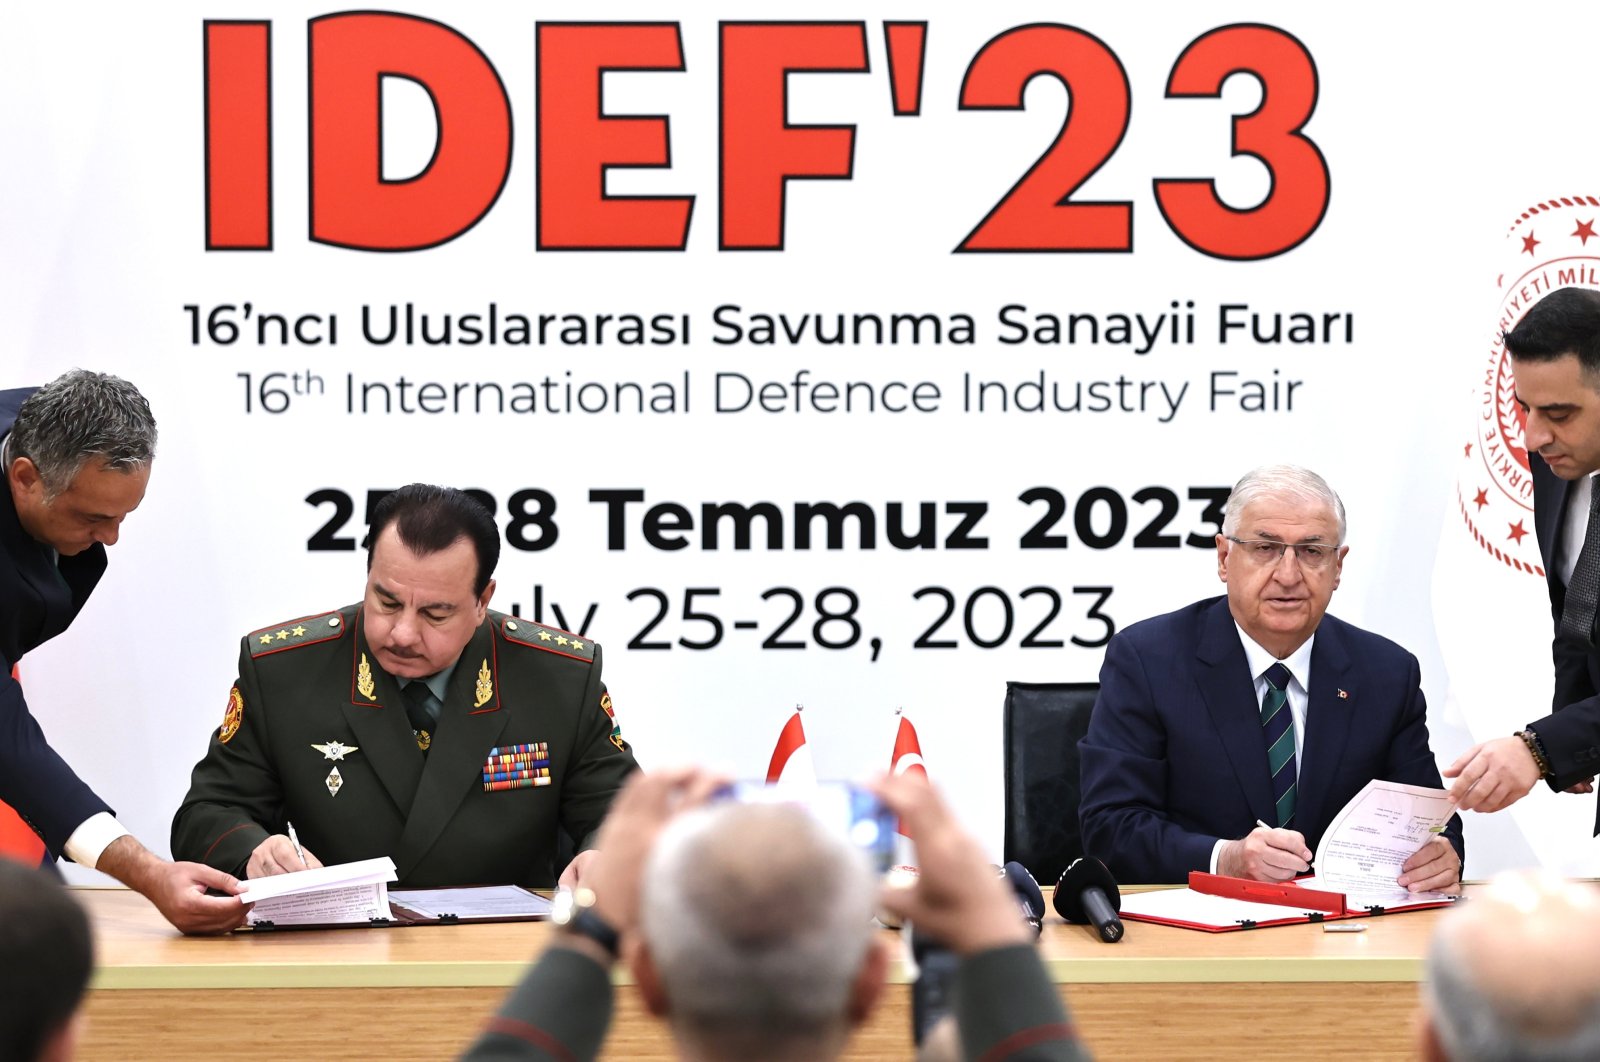 National Defense Minister Yaşar Güler (R) and Minister of Defense of Tajikistan General Şerali Mirzo (L) signs the agreement at IDEF, Istanbul, Türkiye, July 26, 2023. (AA Photo)